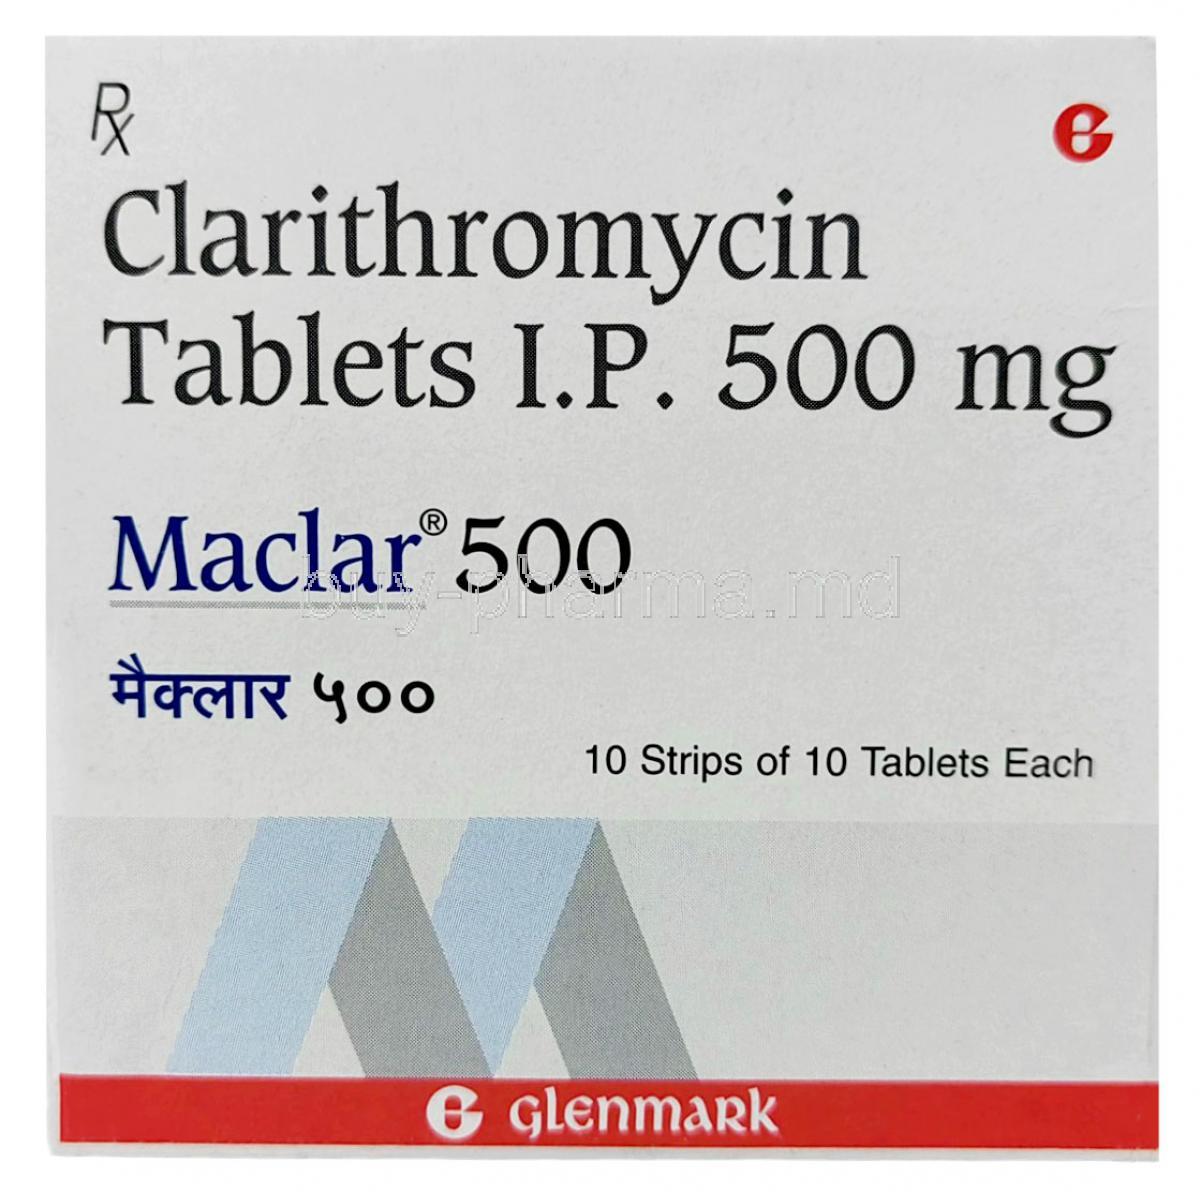 Maclar 500, Clarithromycin 500mg, Glenmark, Box front view